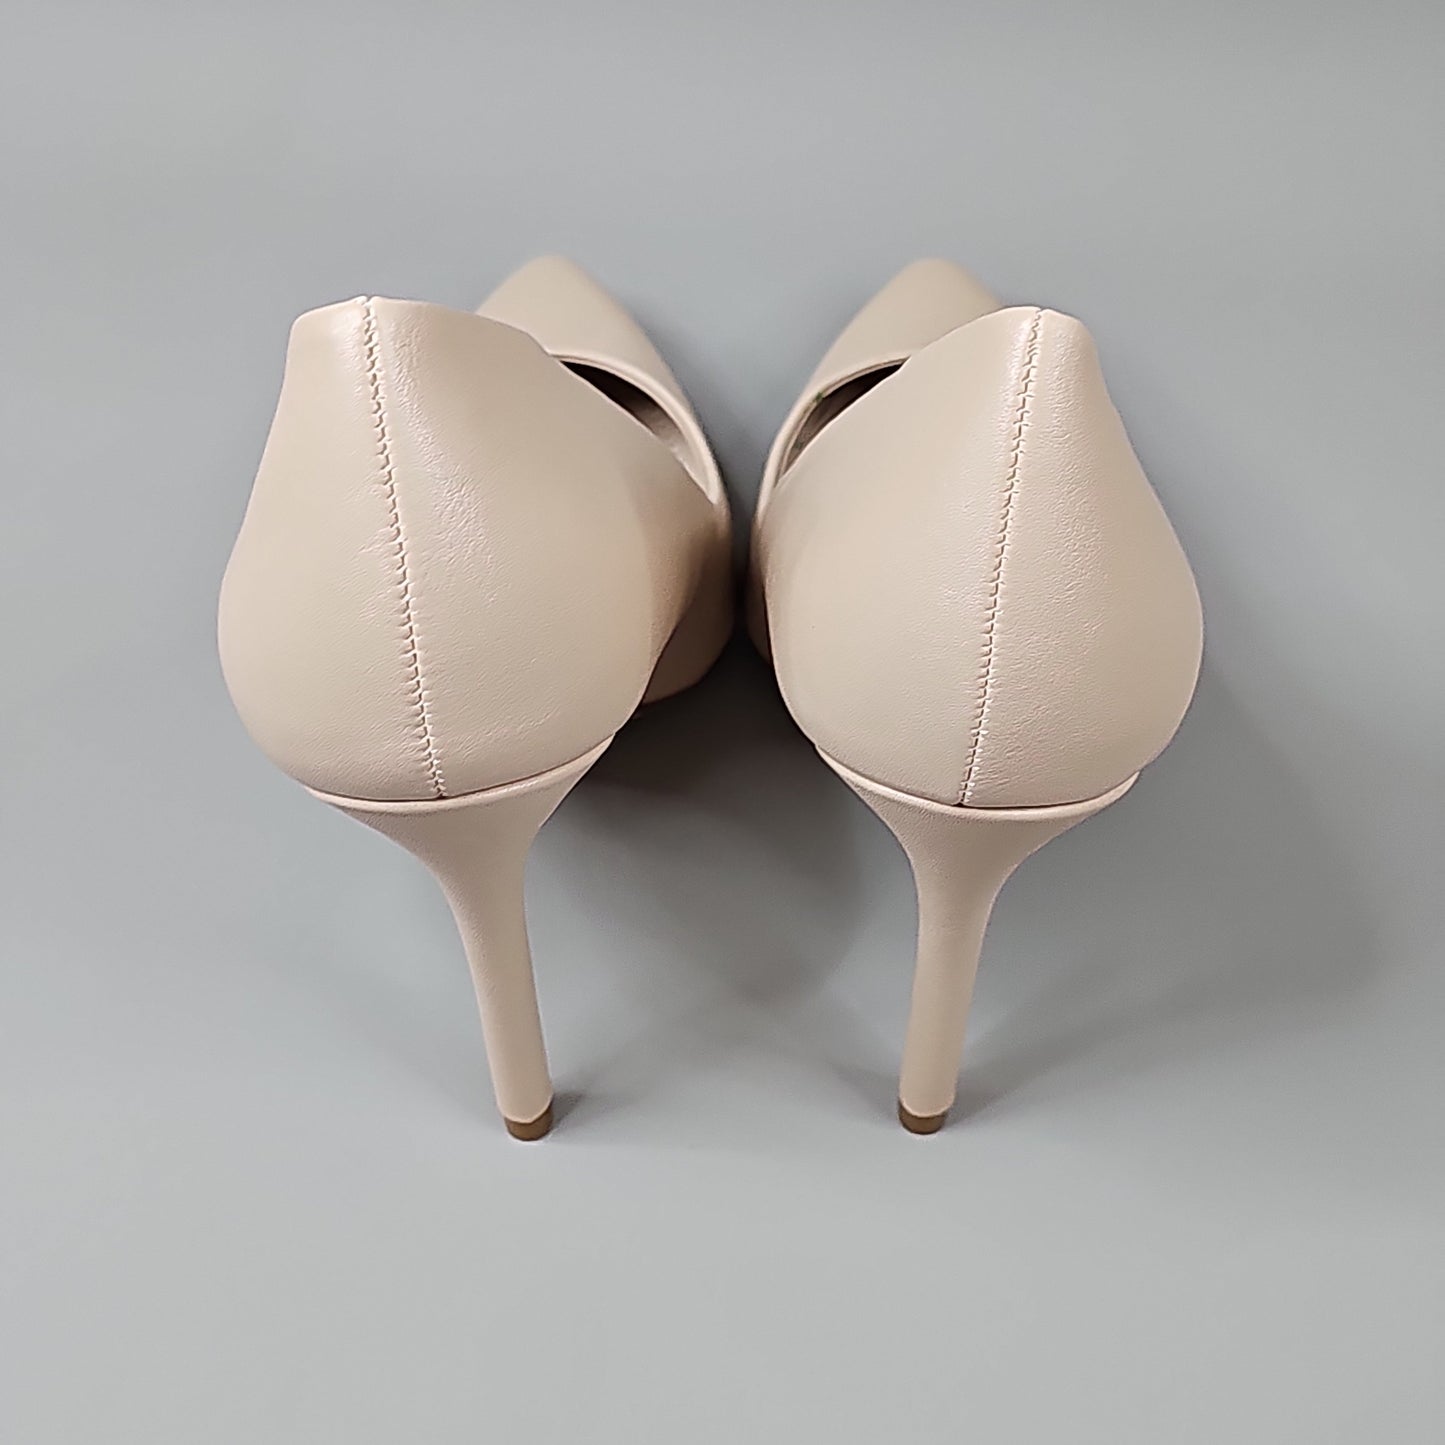 CHARLES BY CHARLES DAVID Women's Palma Pump Shoe Sz 6 M Nude Smooth (New)